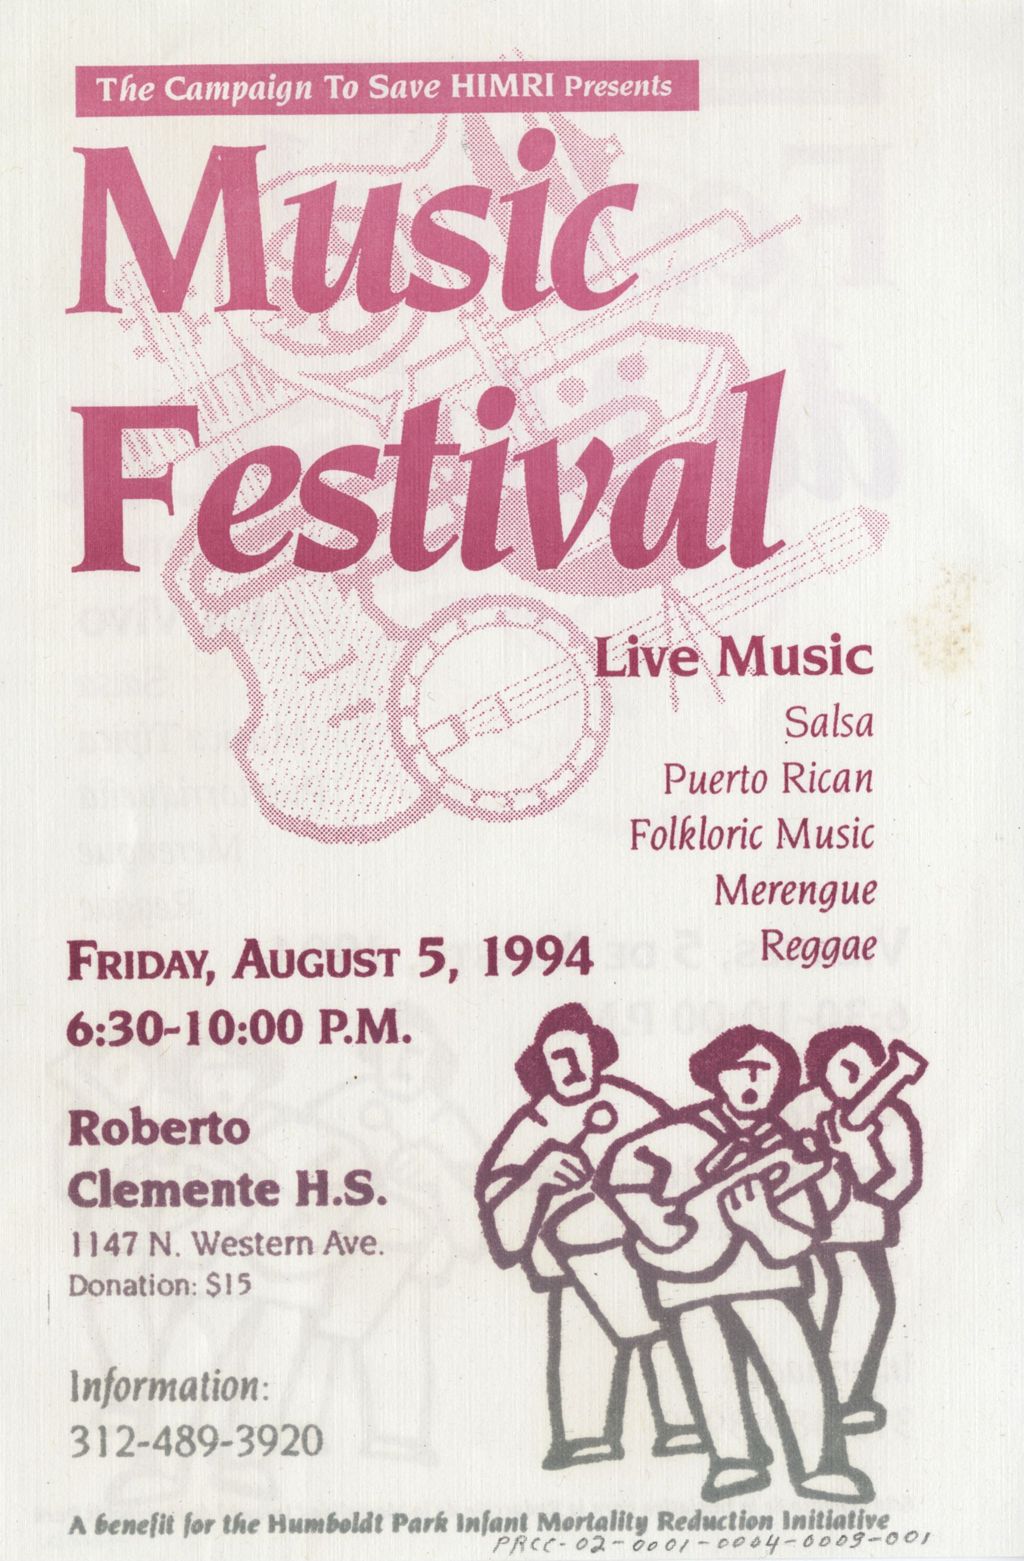 Miniature of Festival de Musica